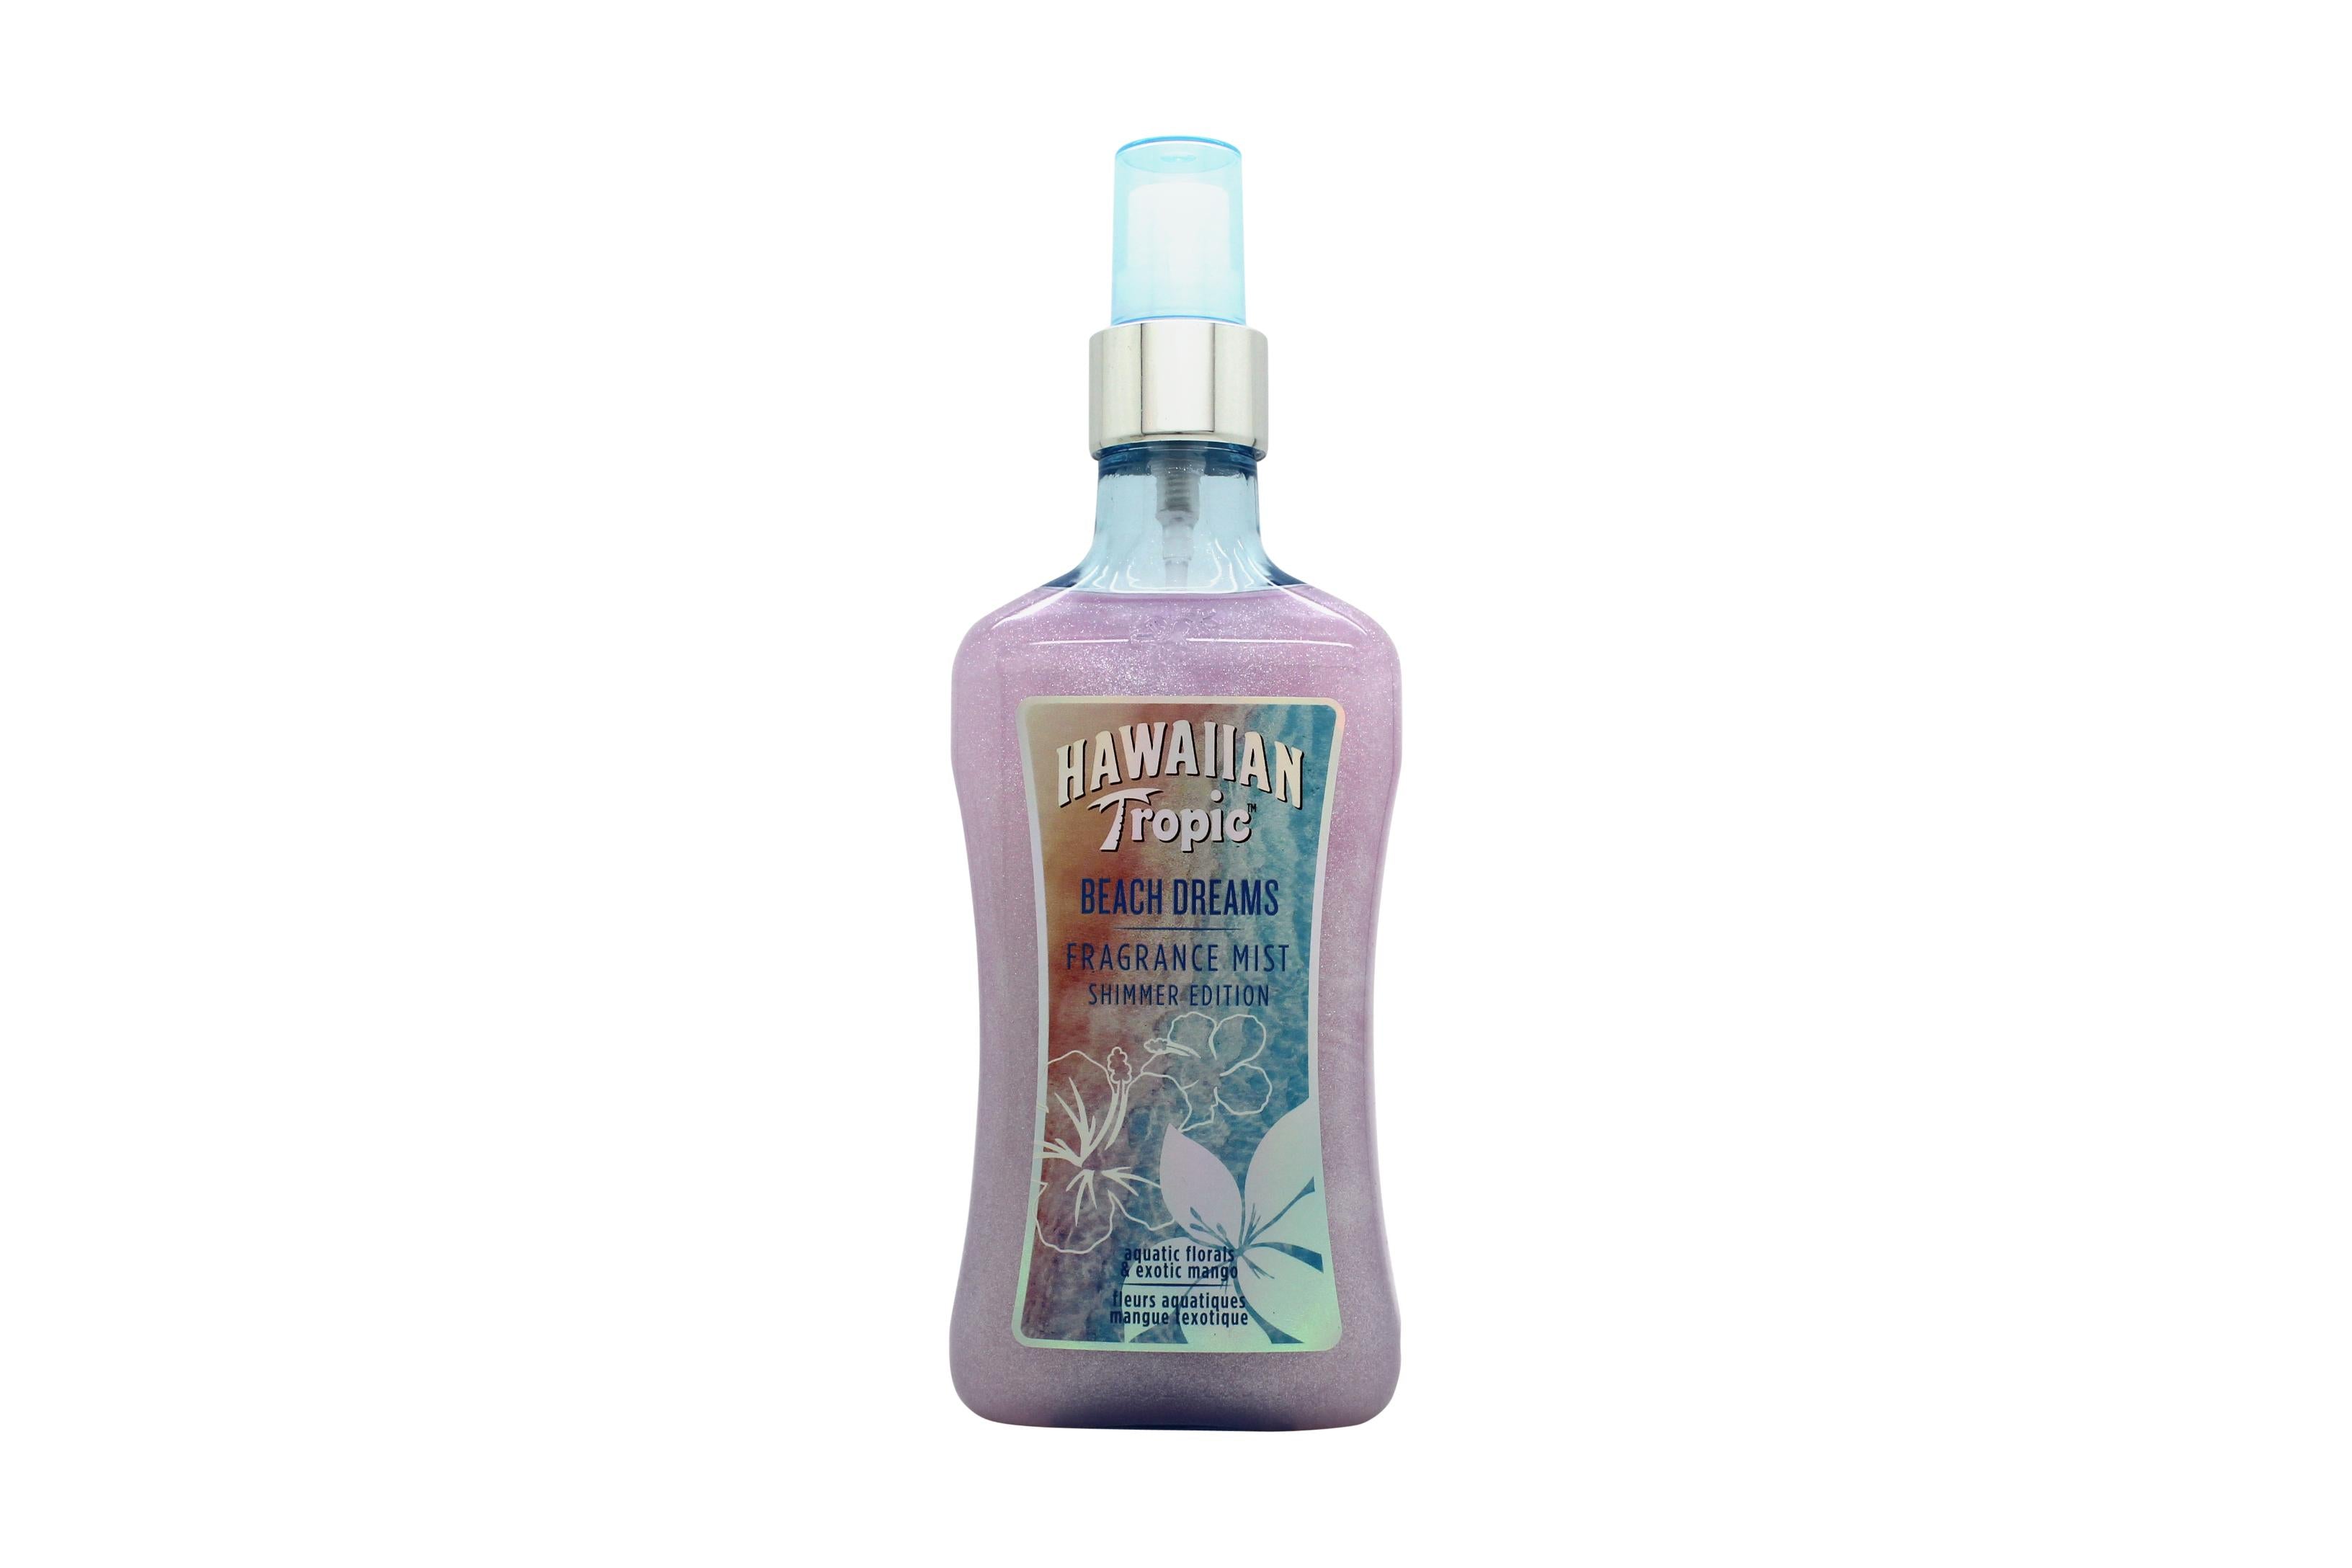 View Hawaiian Tropic Beach Dreams Shimmer Edition Fragrance Mist 250ml information